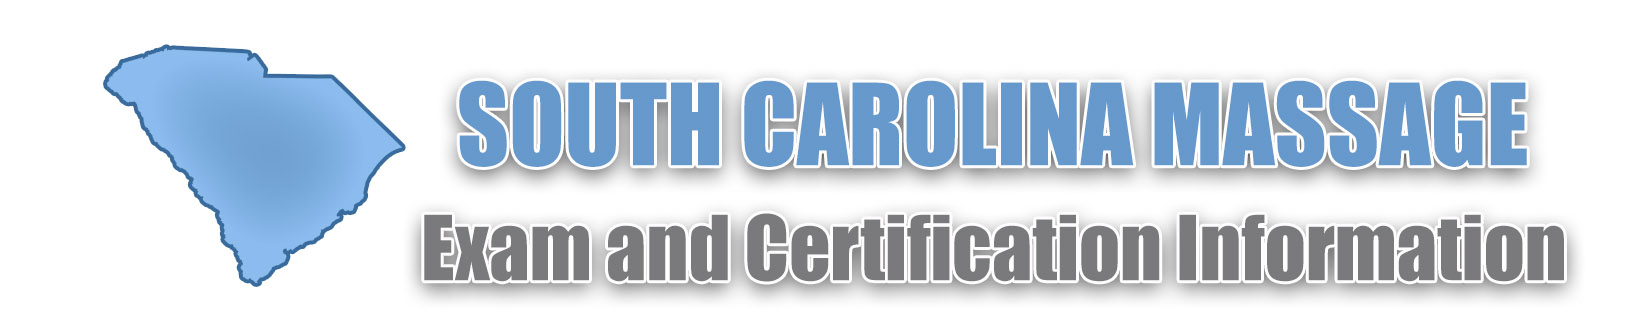 South Carolina MBLEX Massage Exam and Certification Information